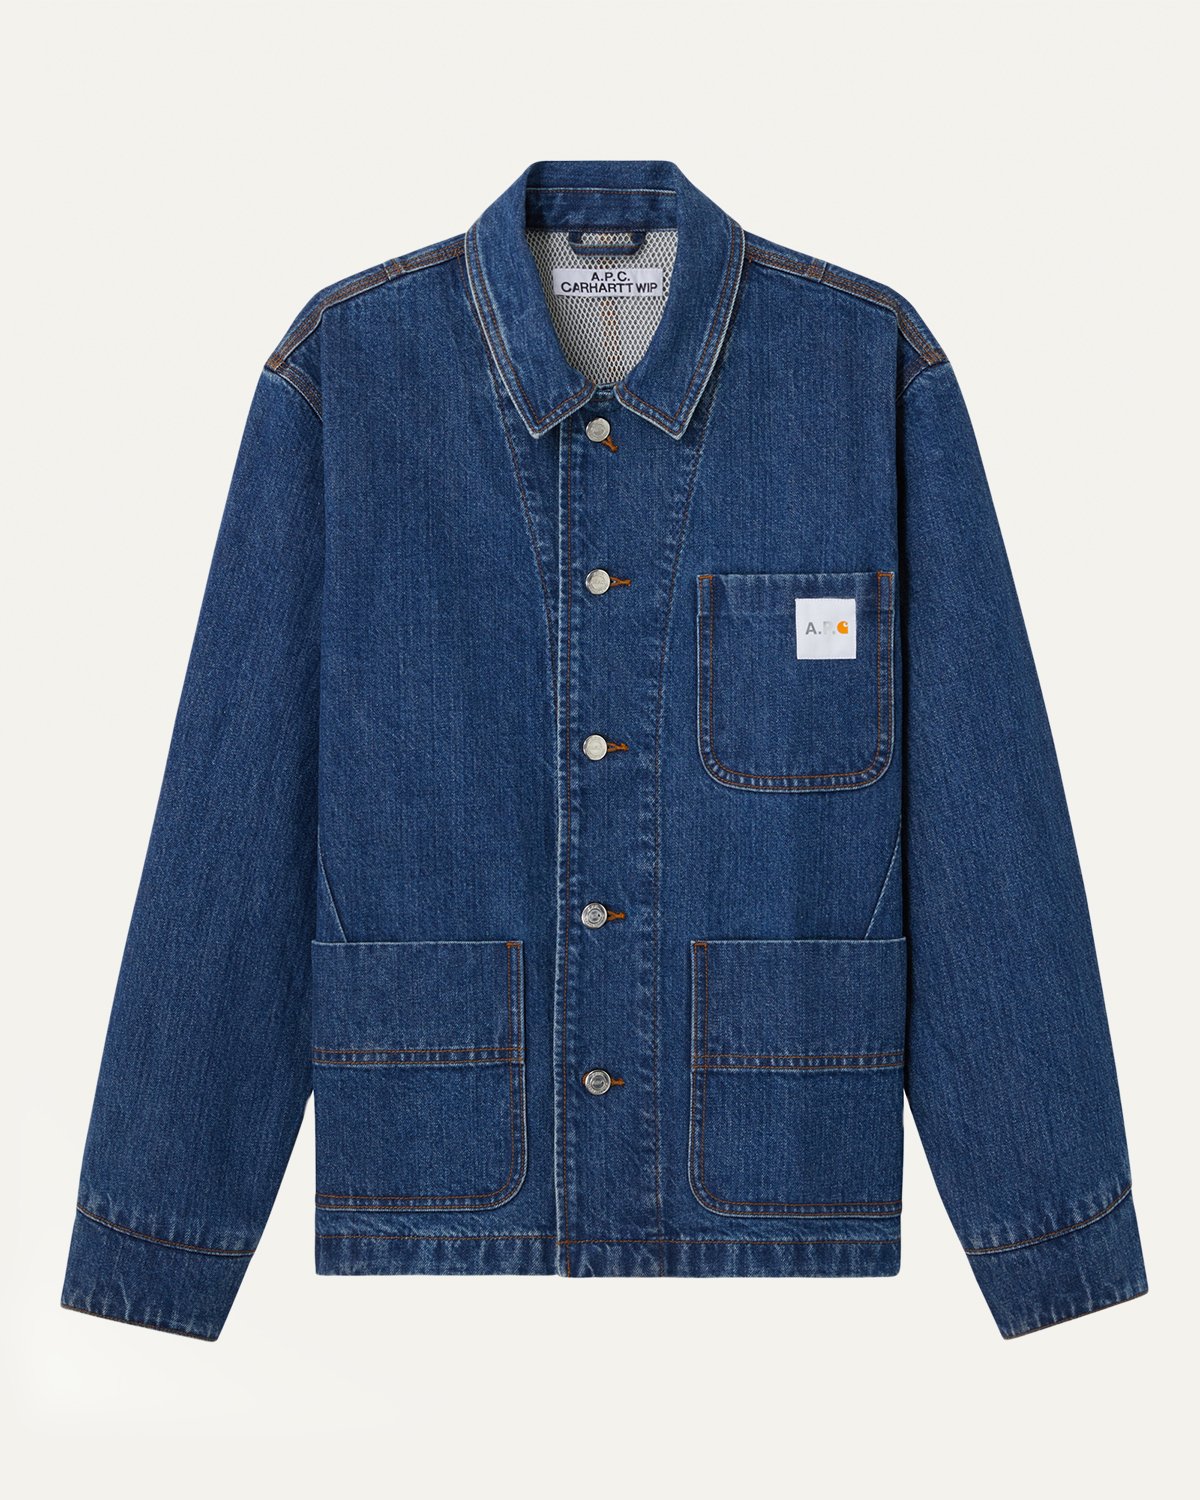 A.P.C. x Carhartt WIP - Talk Jacket - Outerwear - Blue - Image 1